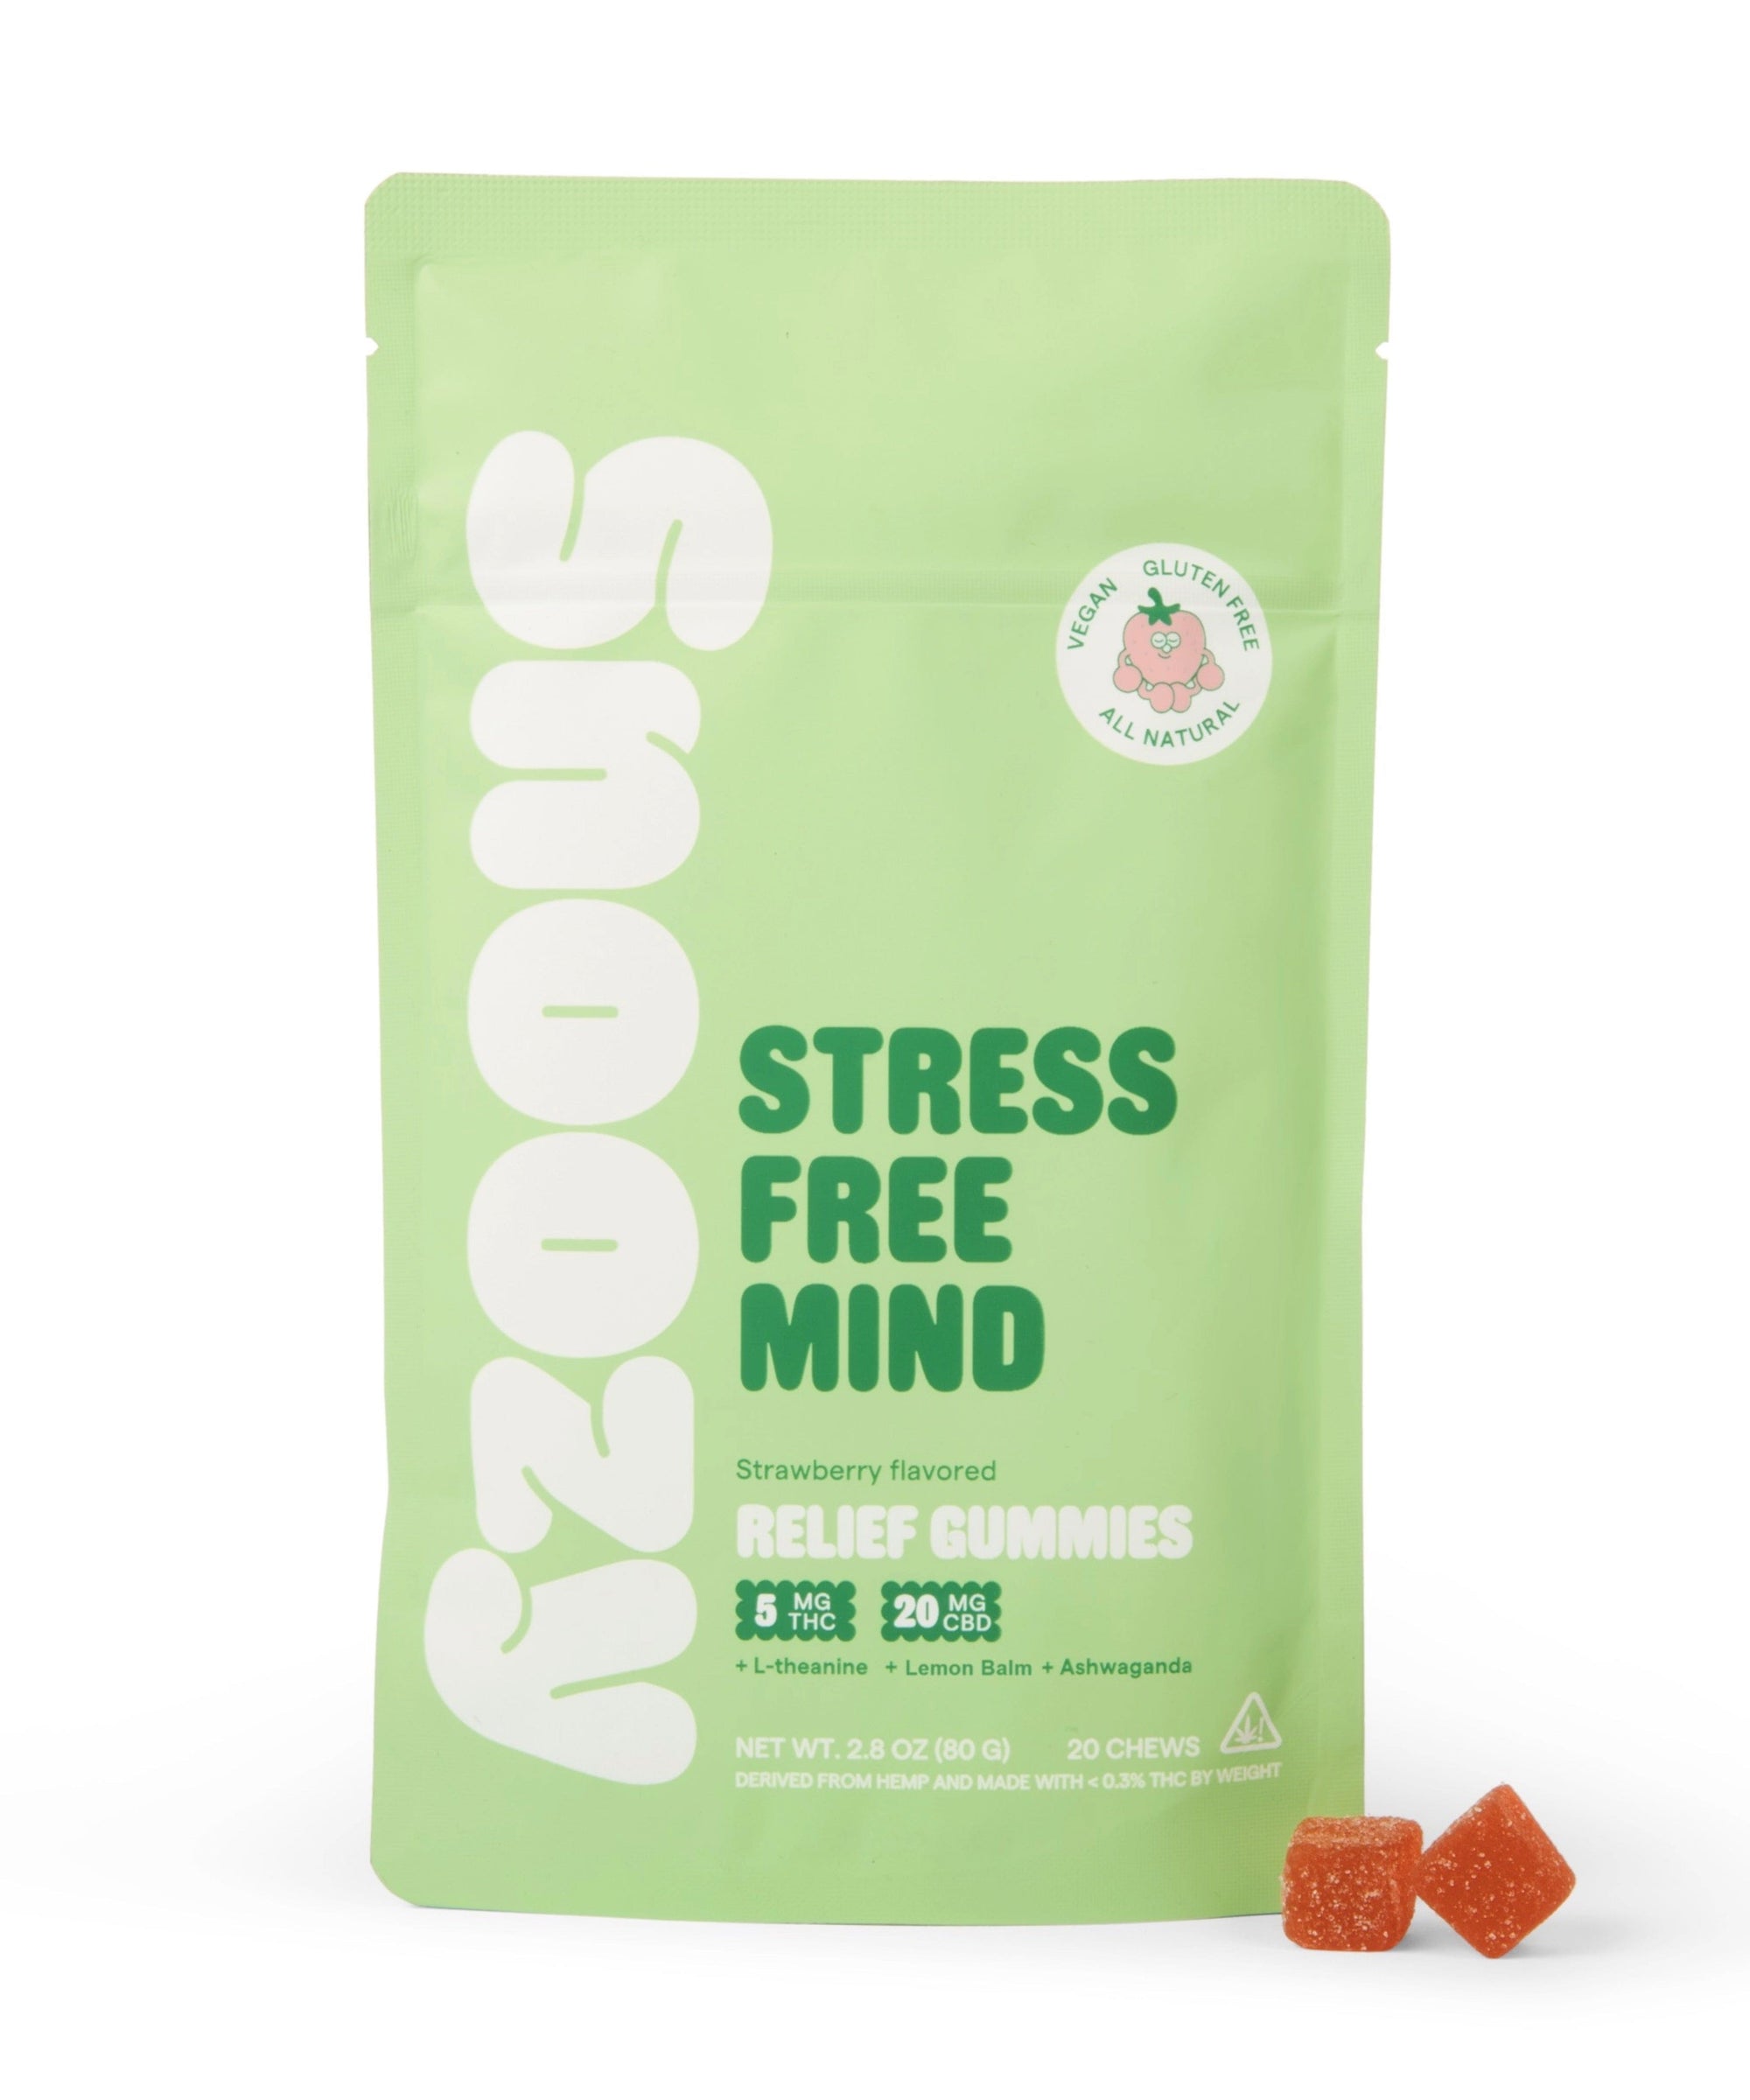 Stress Free Mind: Relief Gummies